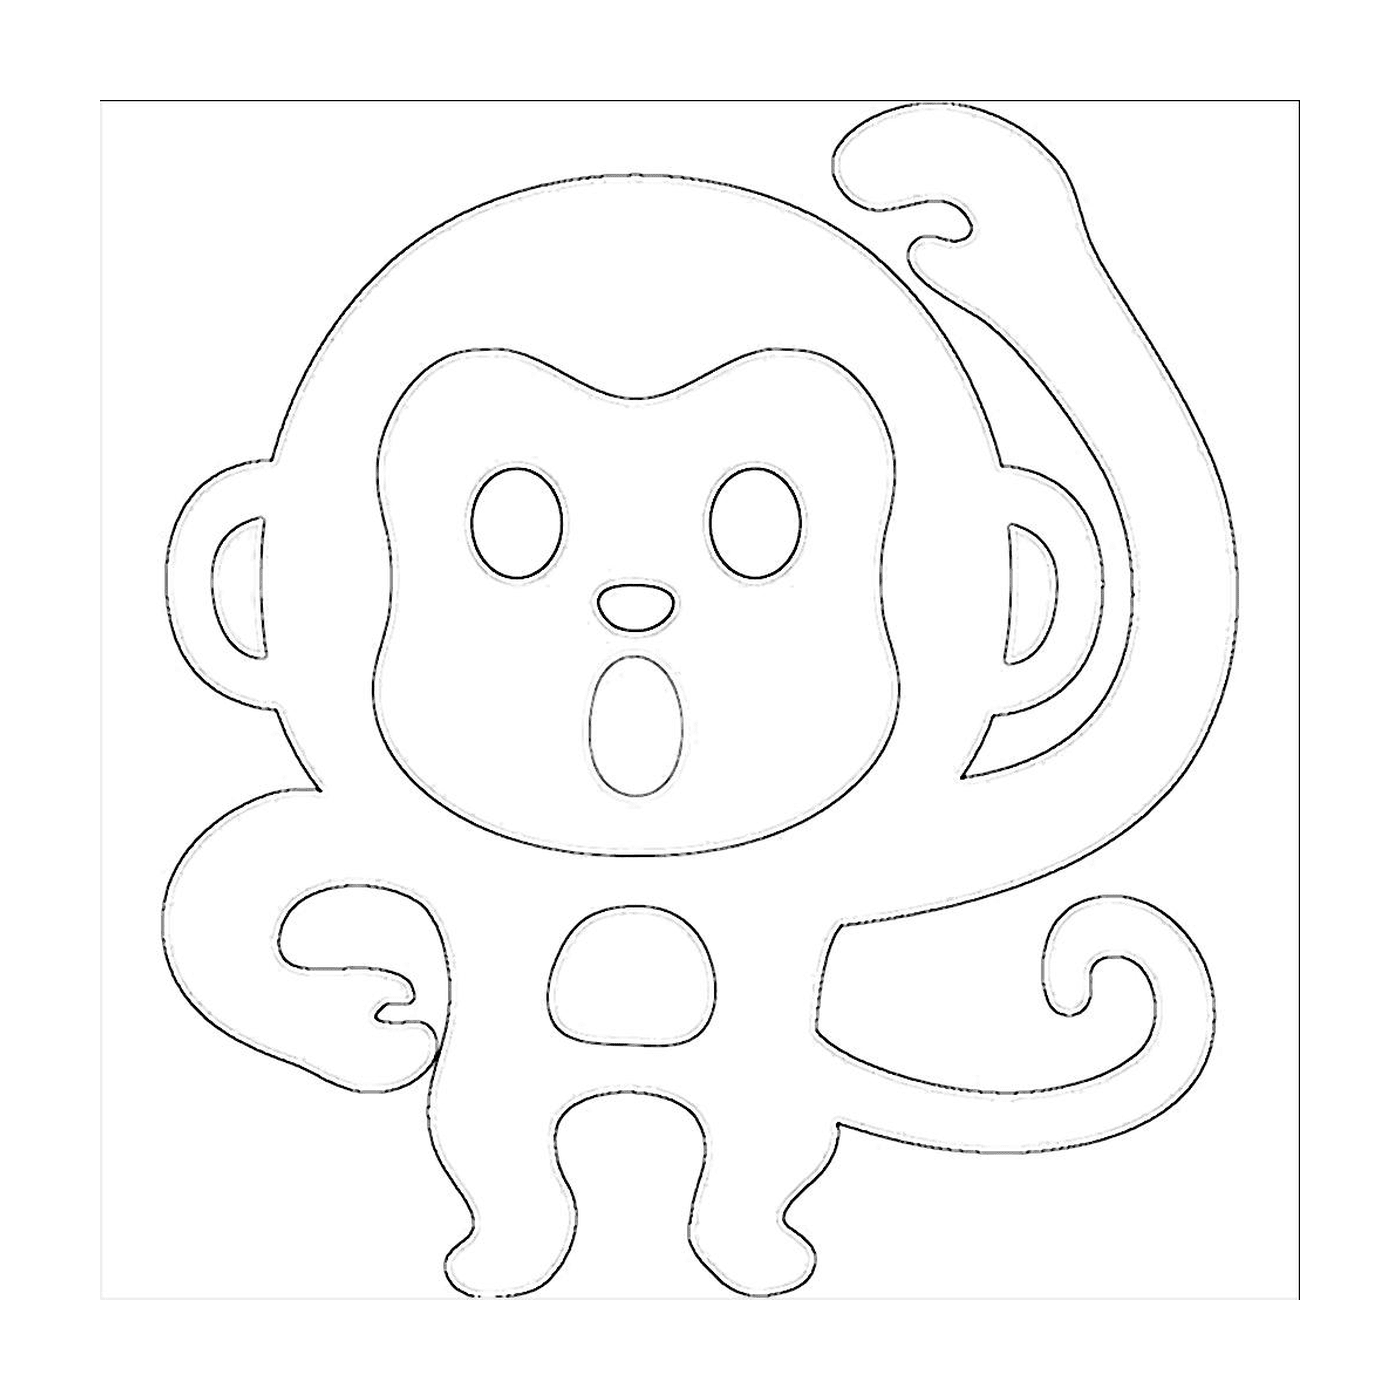  A drawing monkey 